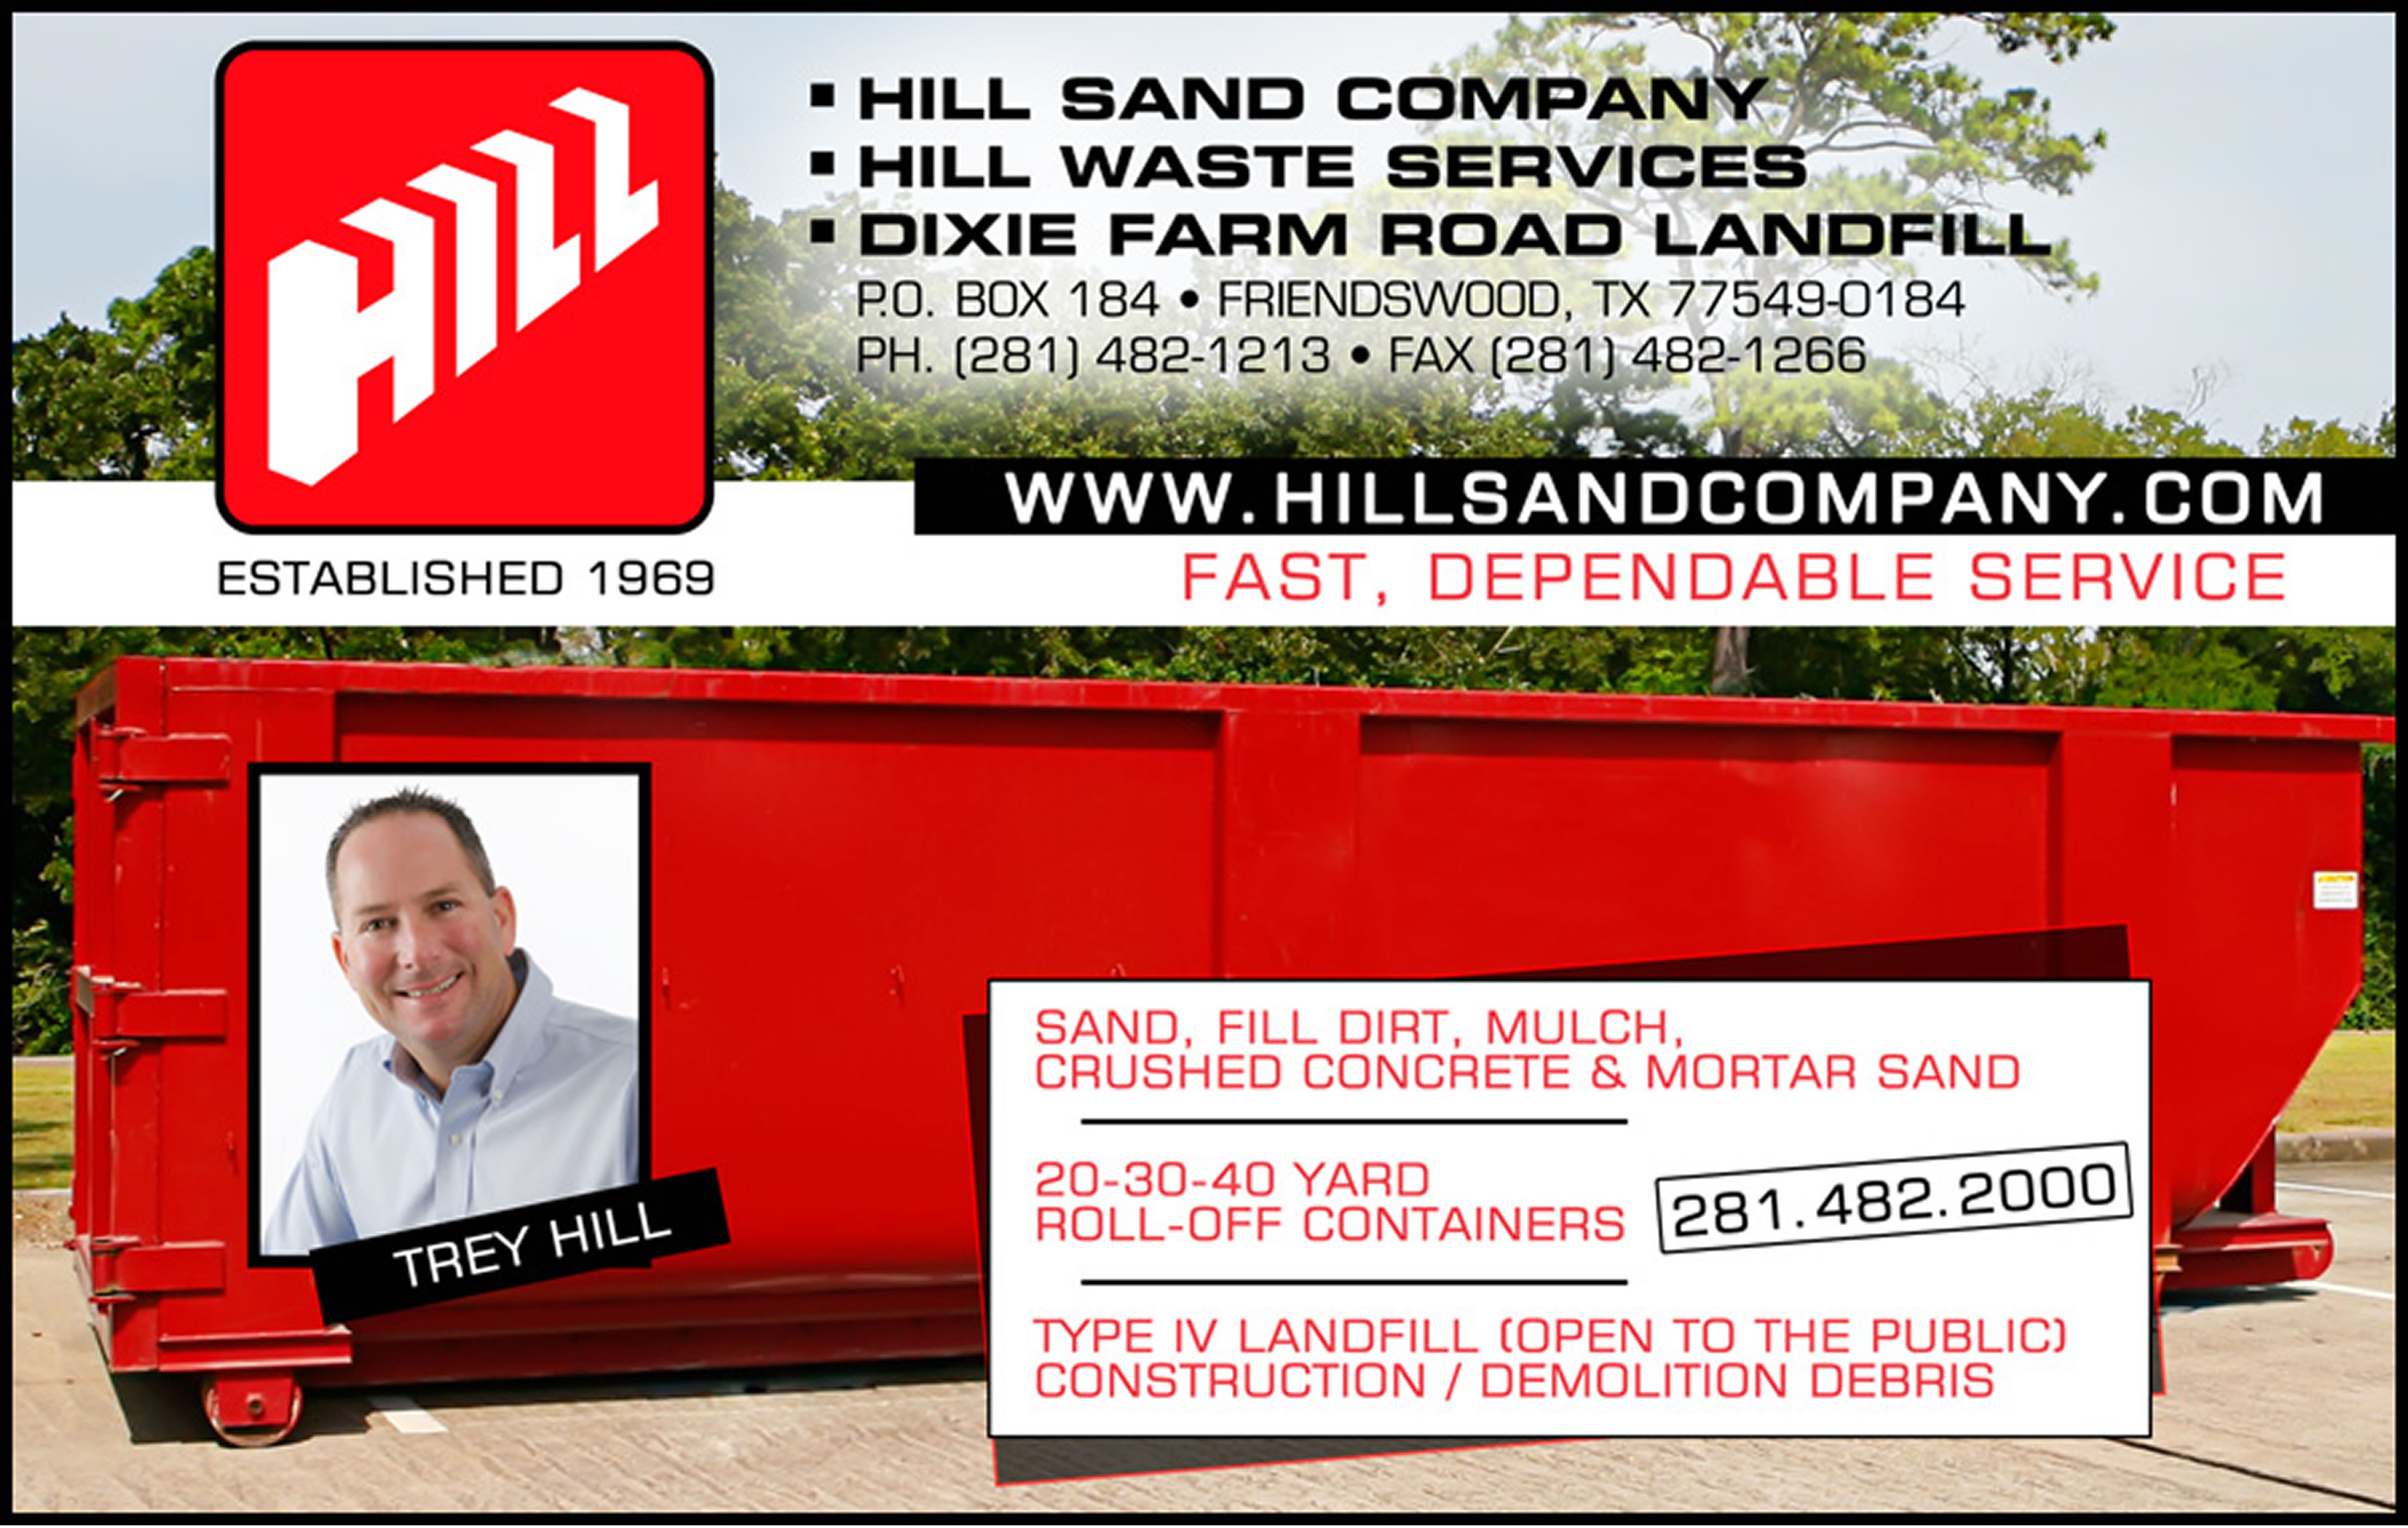 Hill Sand Company